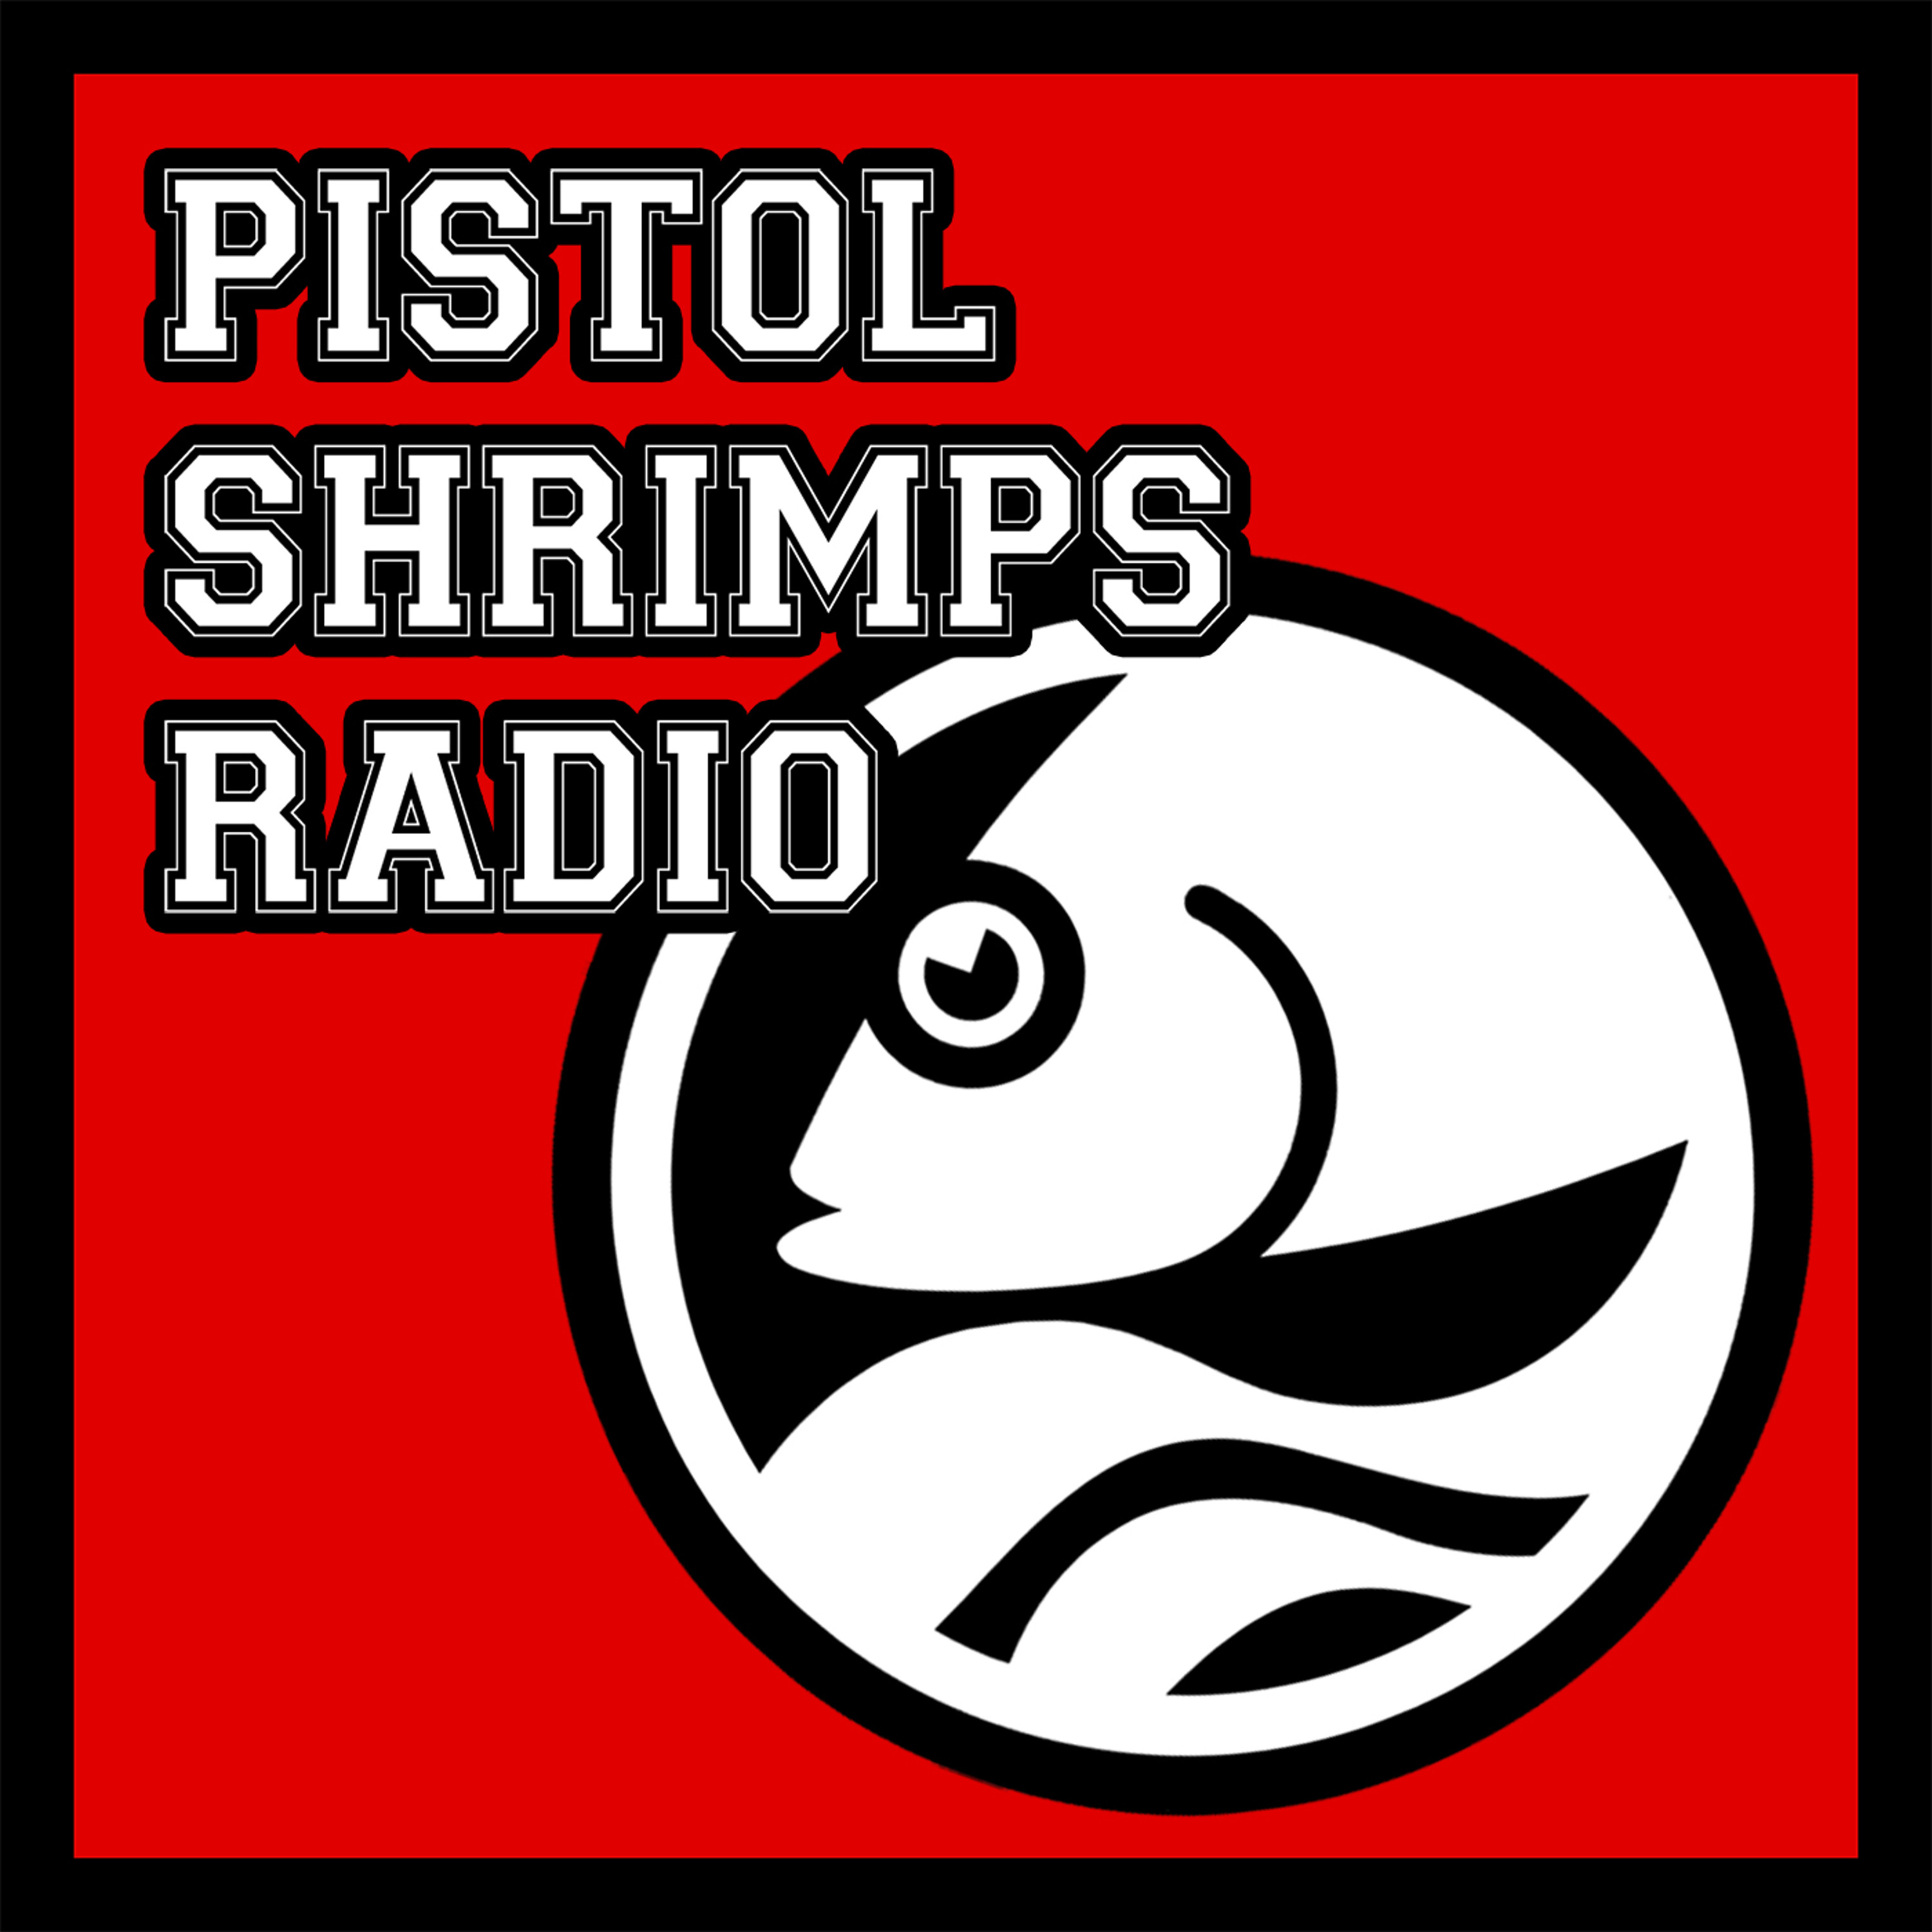 PISTOL SHRIMPS RADIO 7/7/15